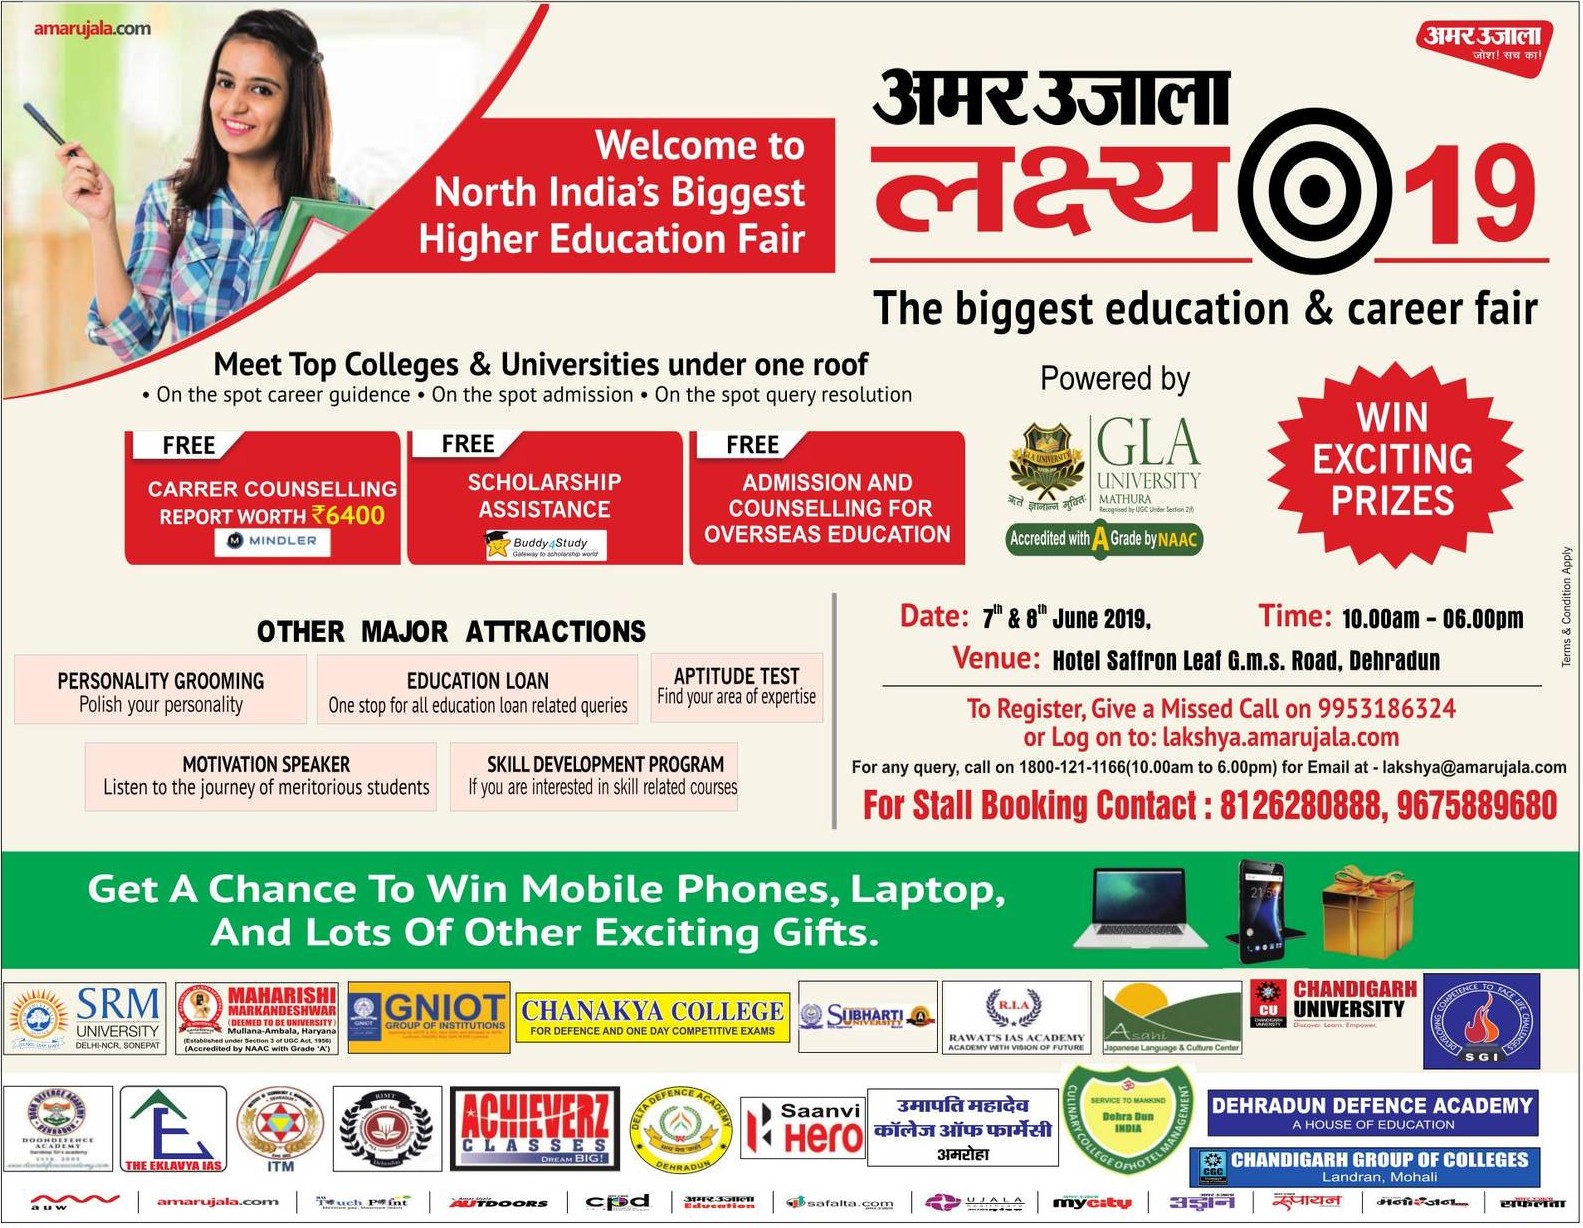 north-indias-biggest-higher-education-fair-win-exciting-prizes-ad-amar-ujala-delhi-06-06-2019.jpg